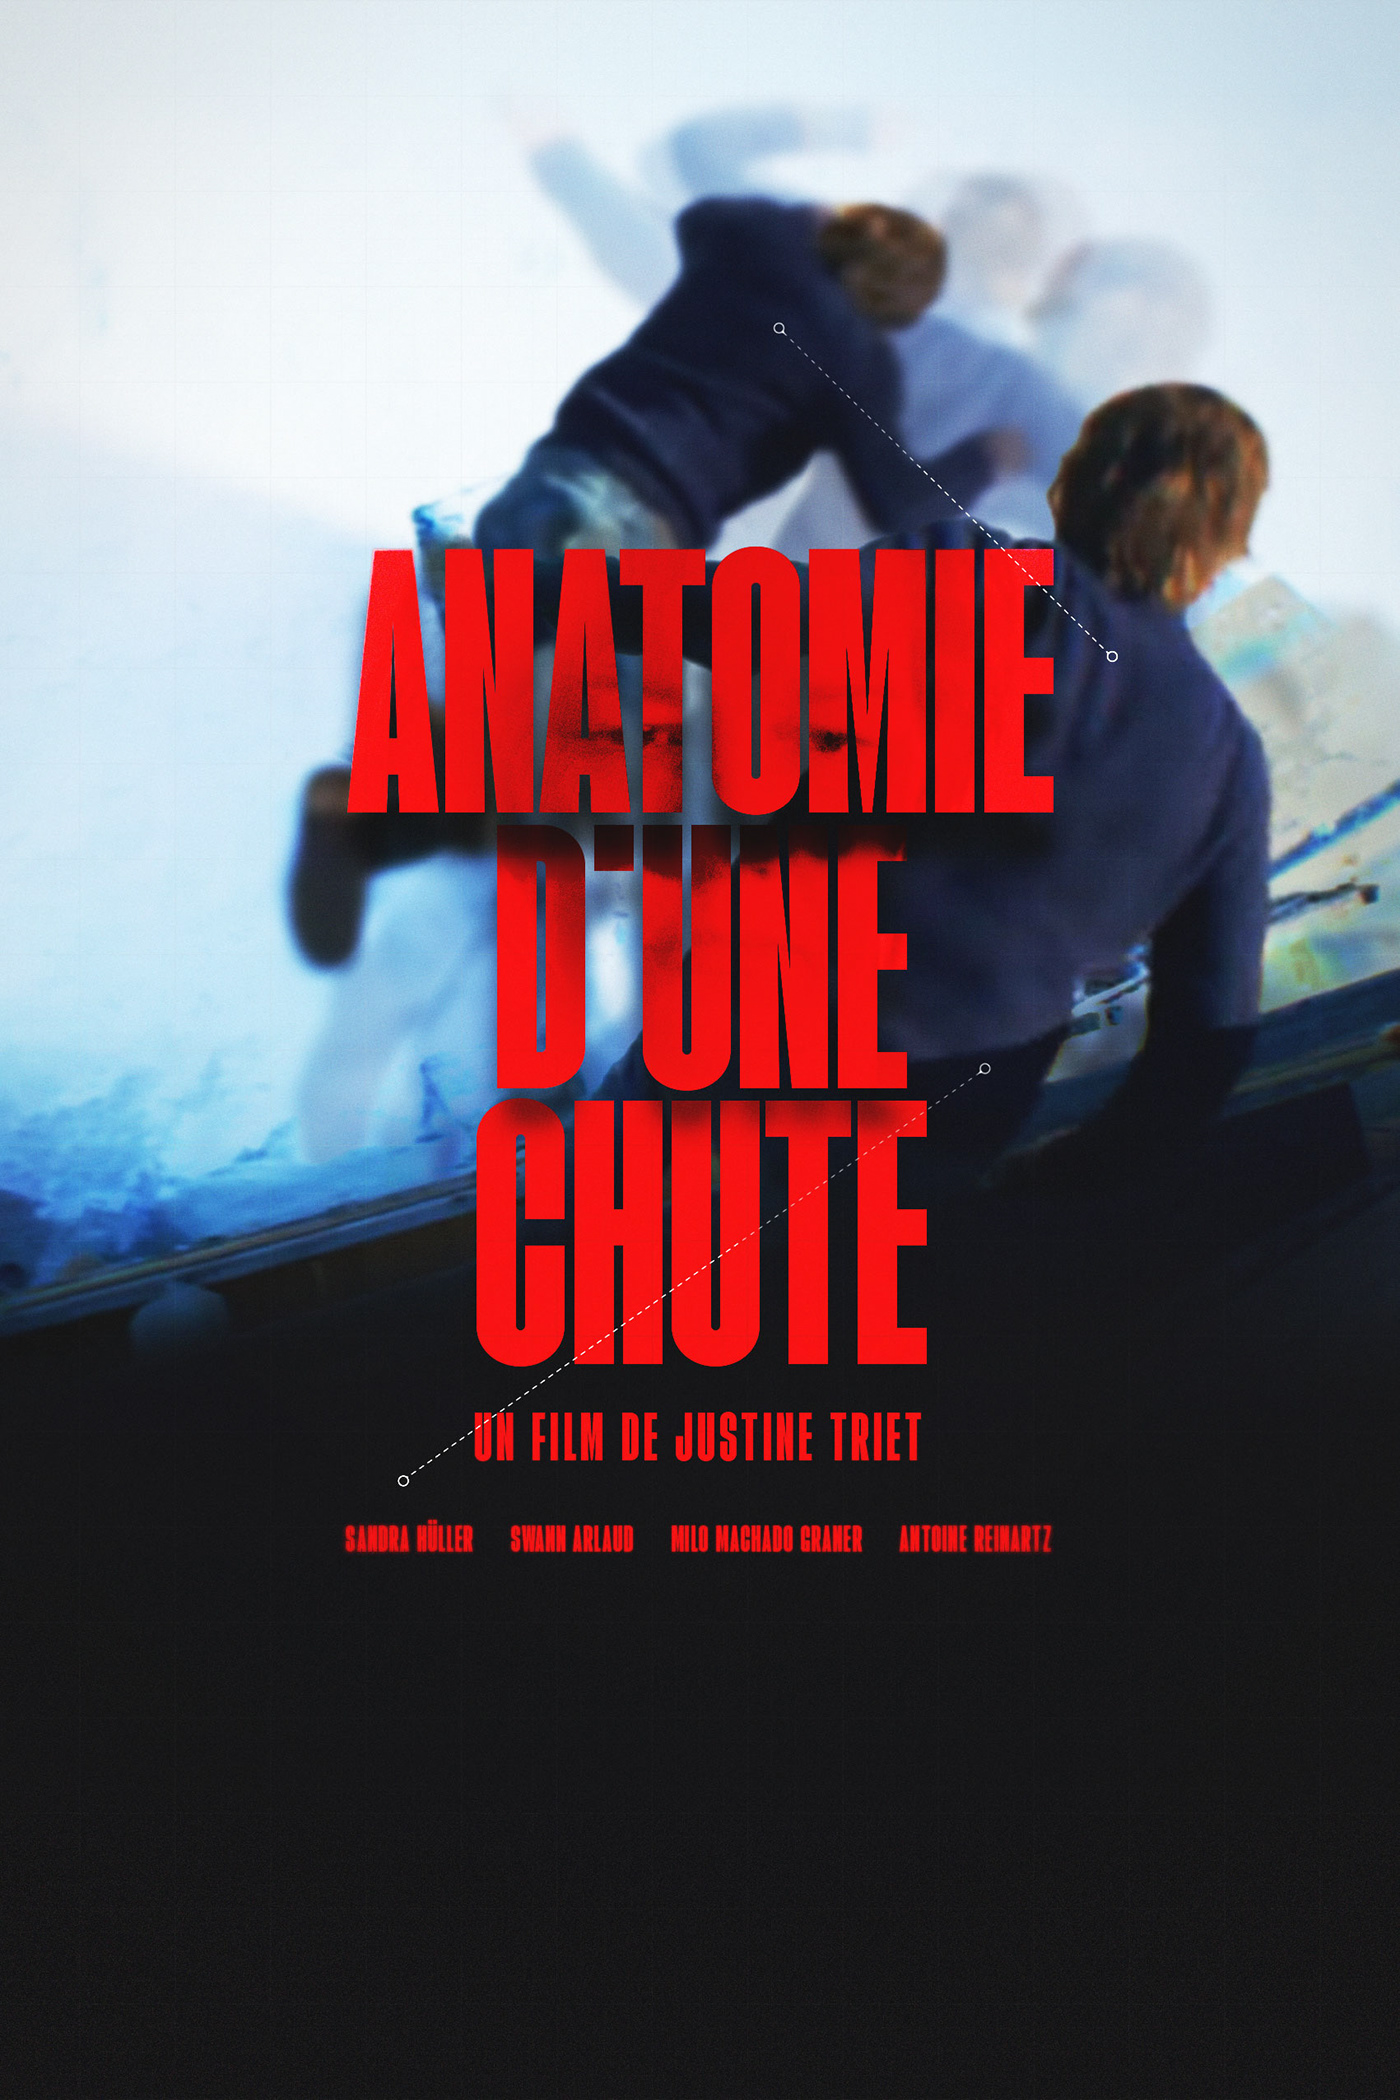 Justine Triet’s ‘Anatomie d'une chute’